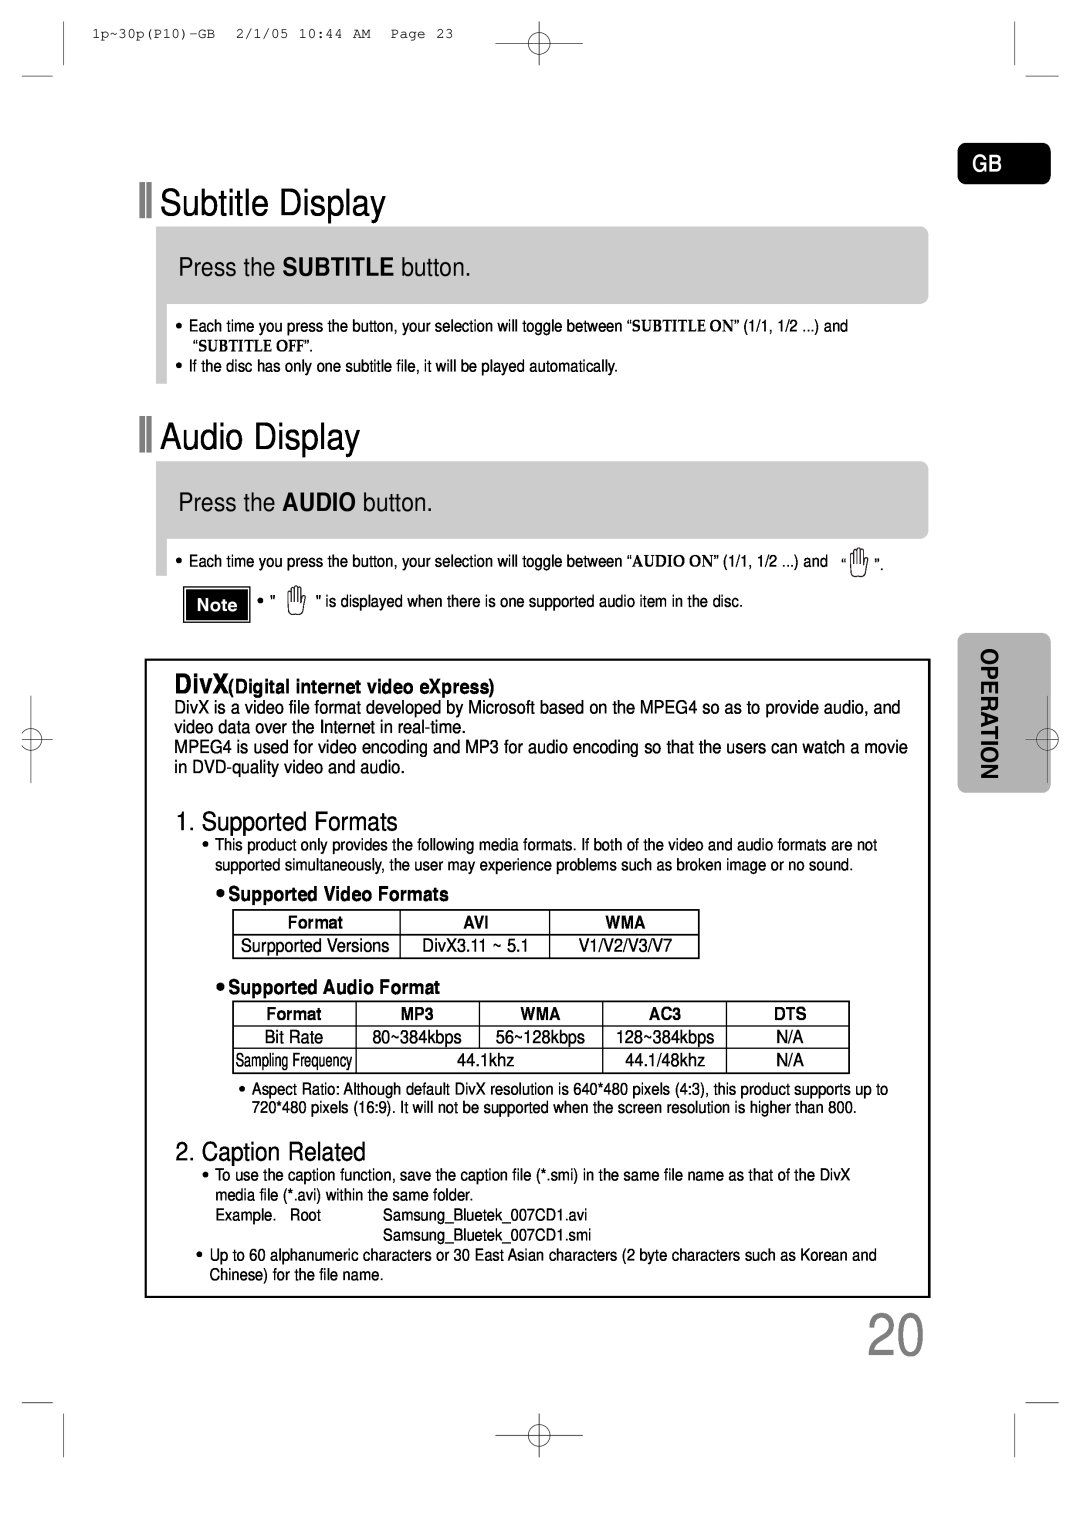 Samsung P10 Subtitle Display, Audio Display, Press the SUBTITLE button, Press the AUDIO button, Supported Formats, 44.1khz 